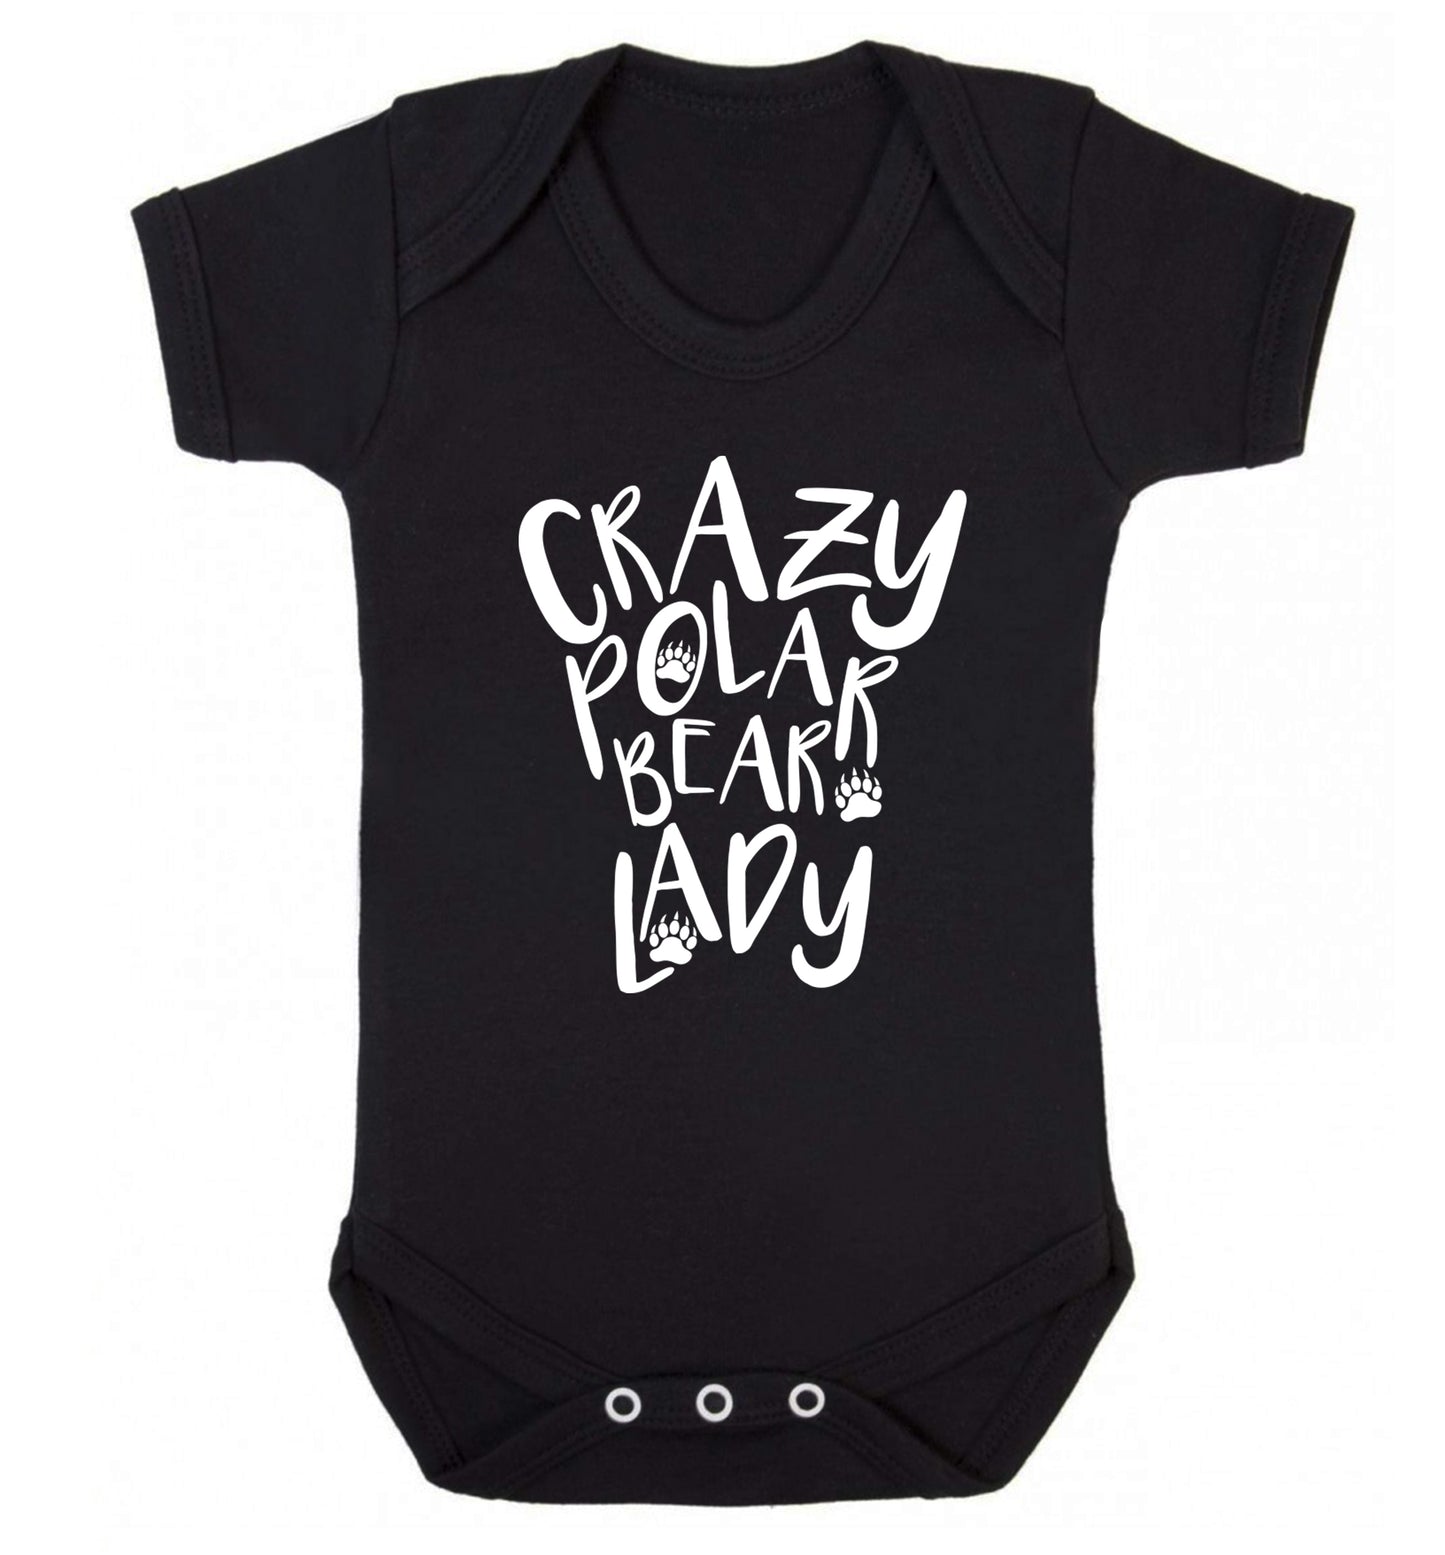 Crazy polar bear lady Baby Vest black 18-24 months